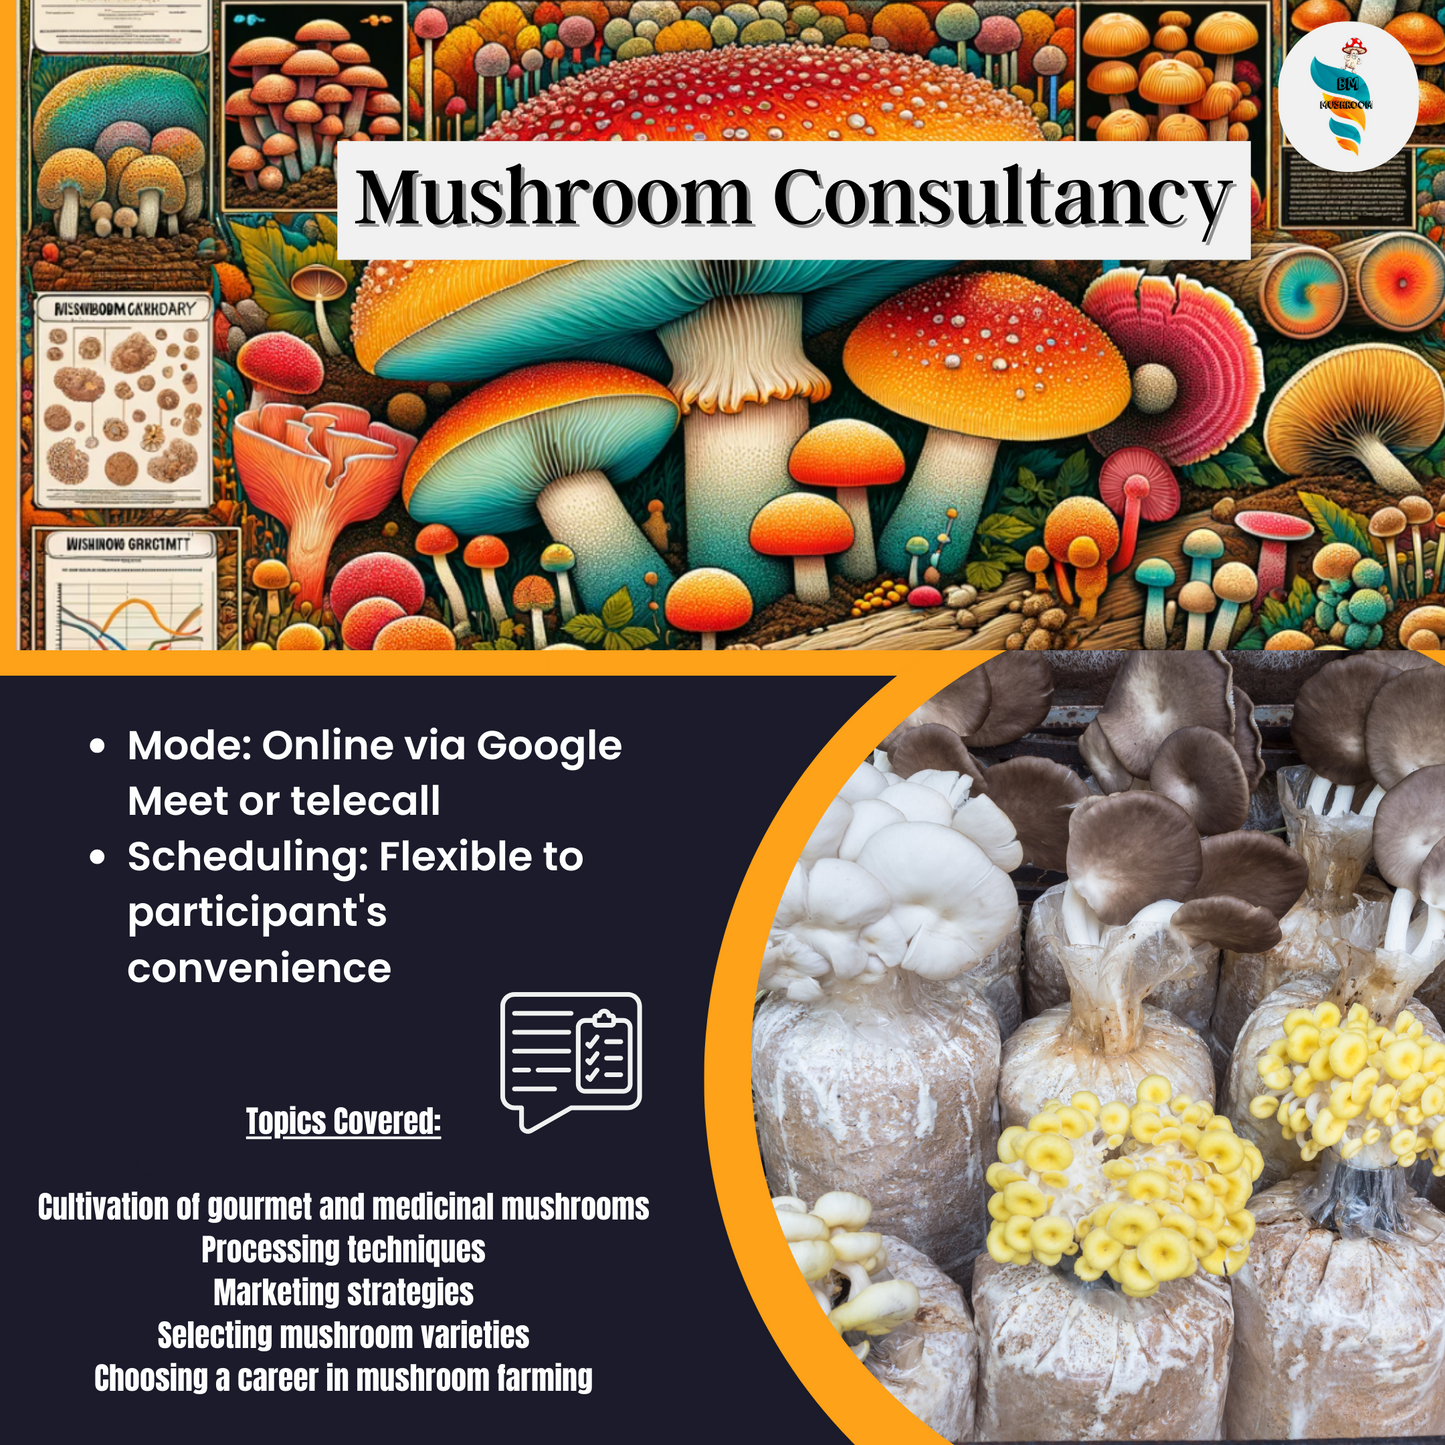 Mushroom Consultancy Service